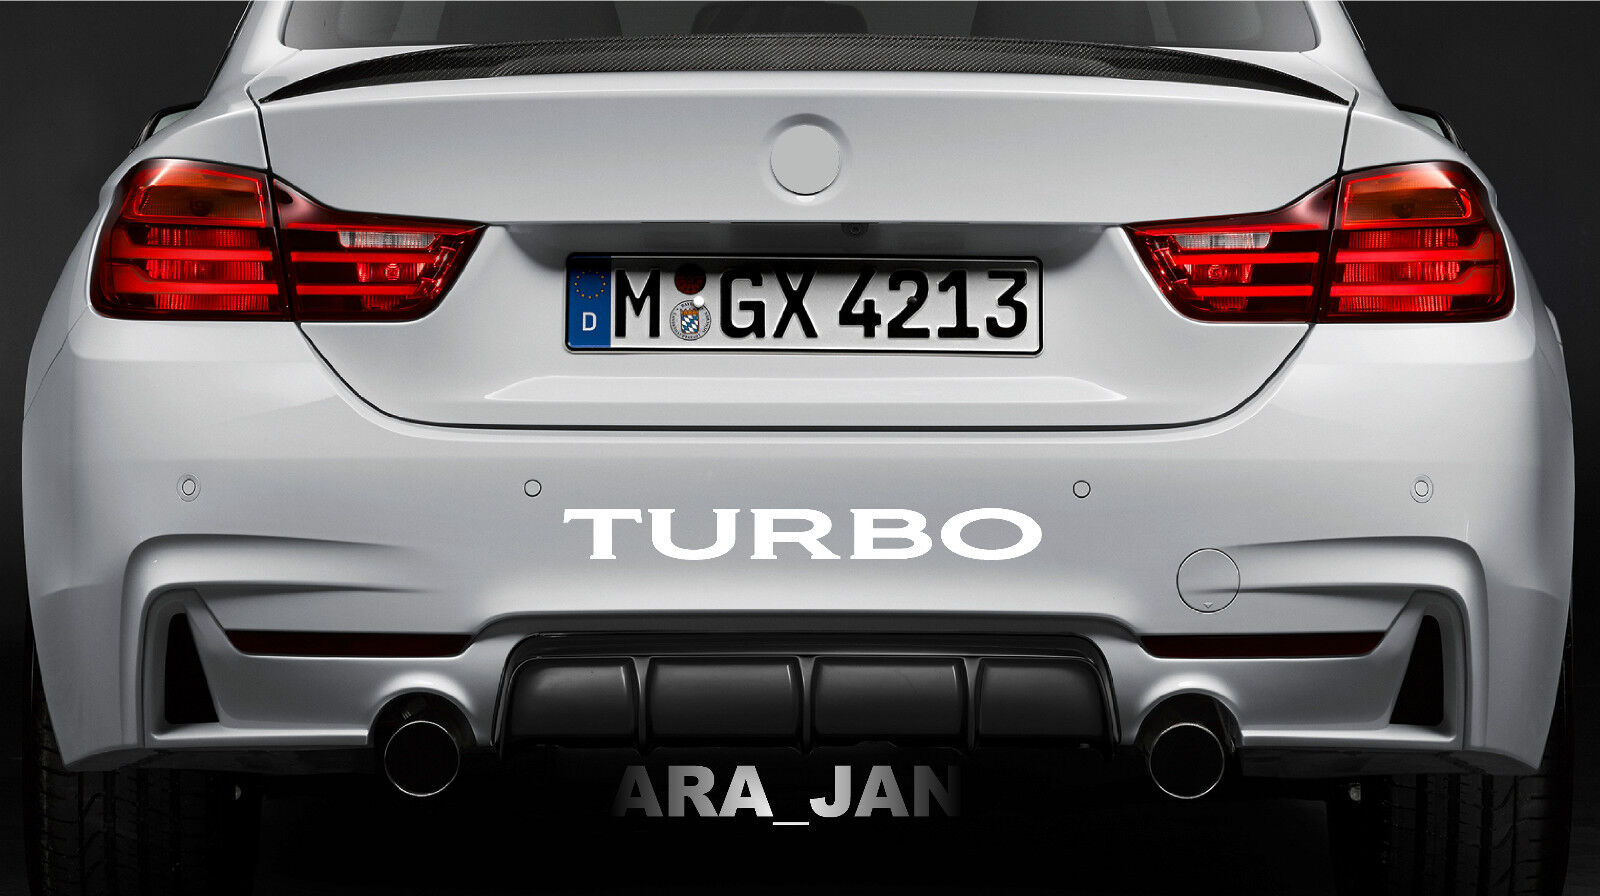 TURBO Vinyl Decal racing sport speed car bumper logo emblem sticker WHITE